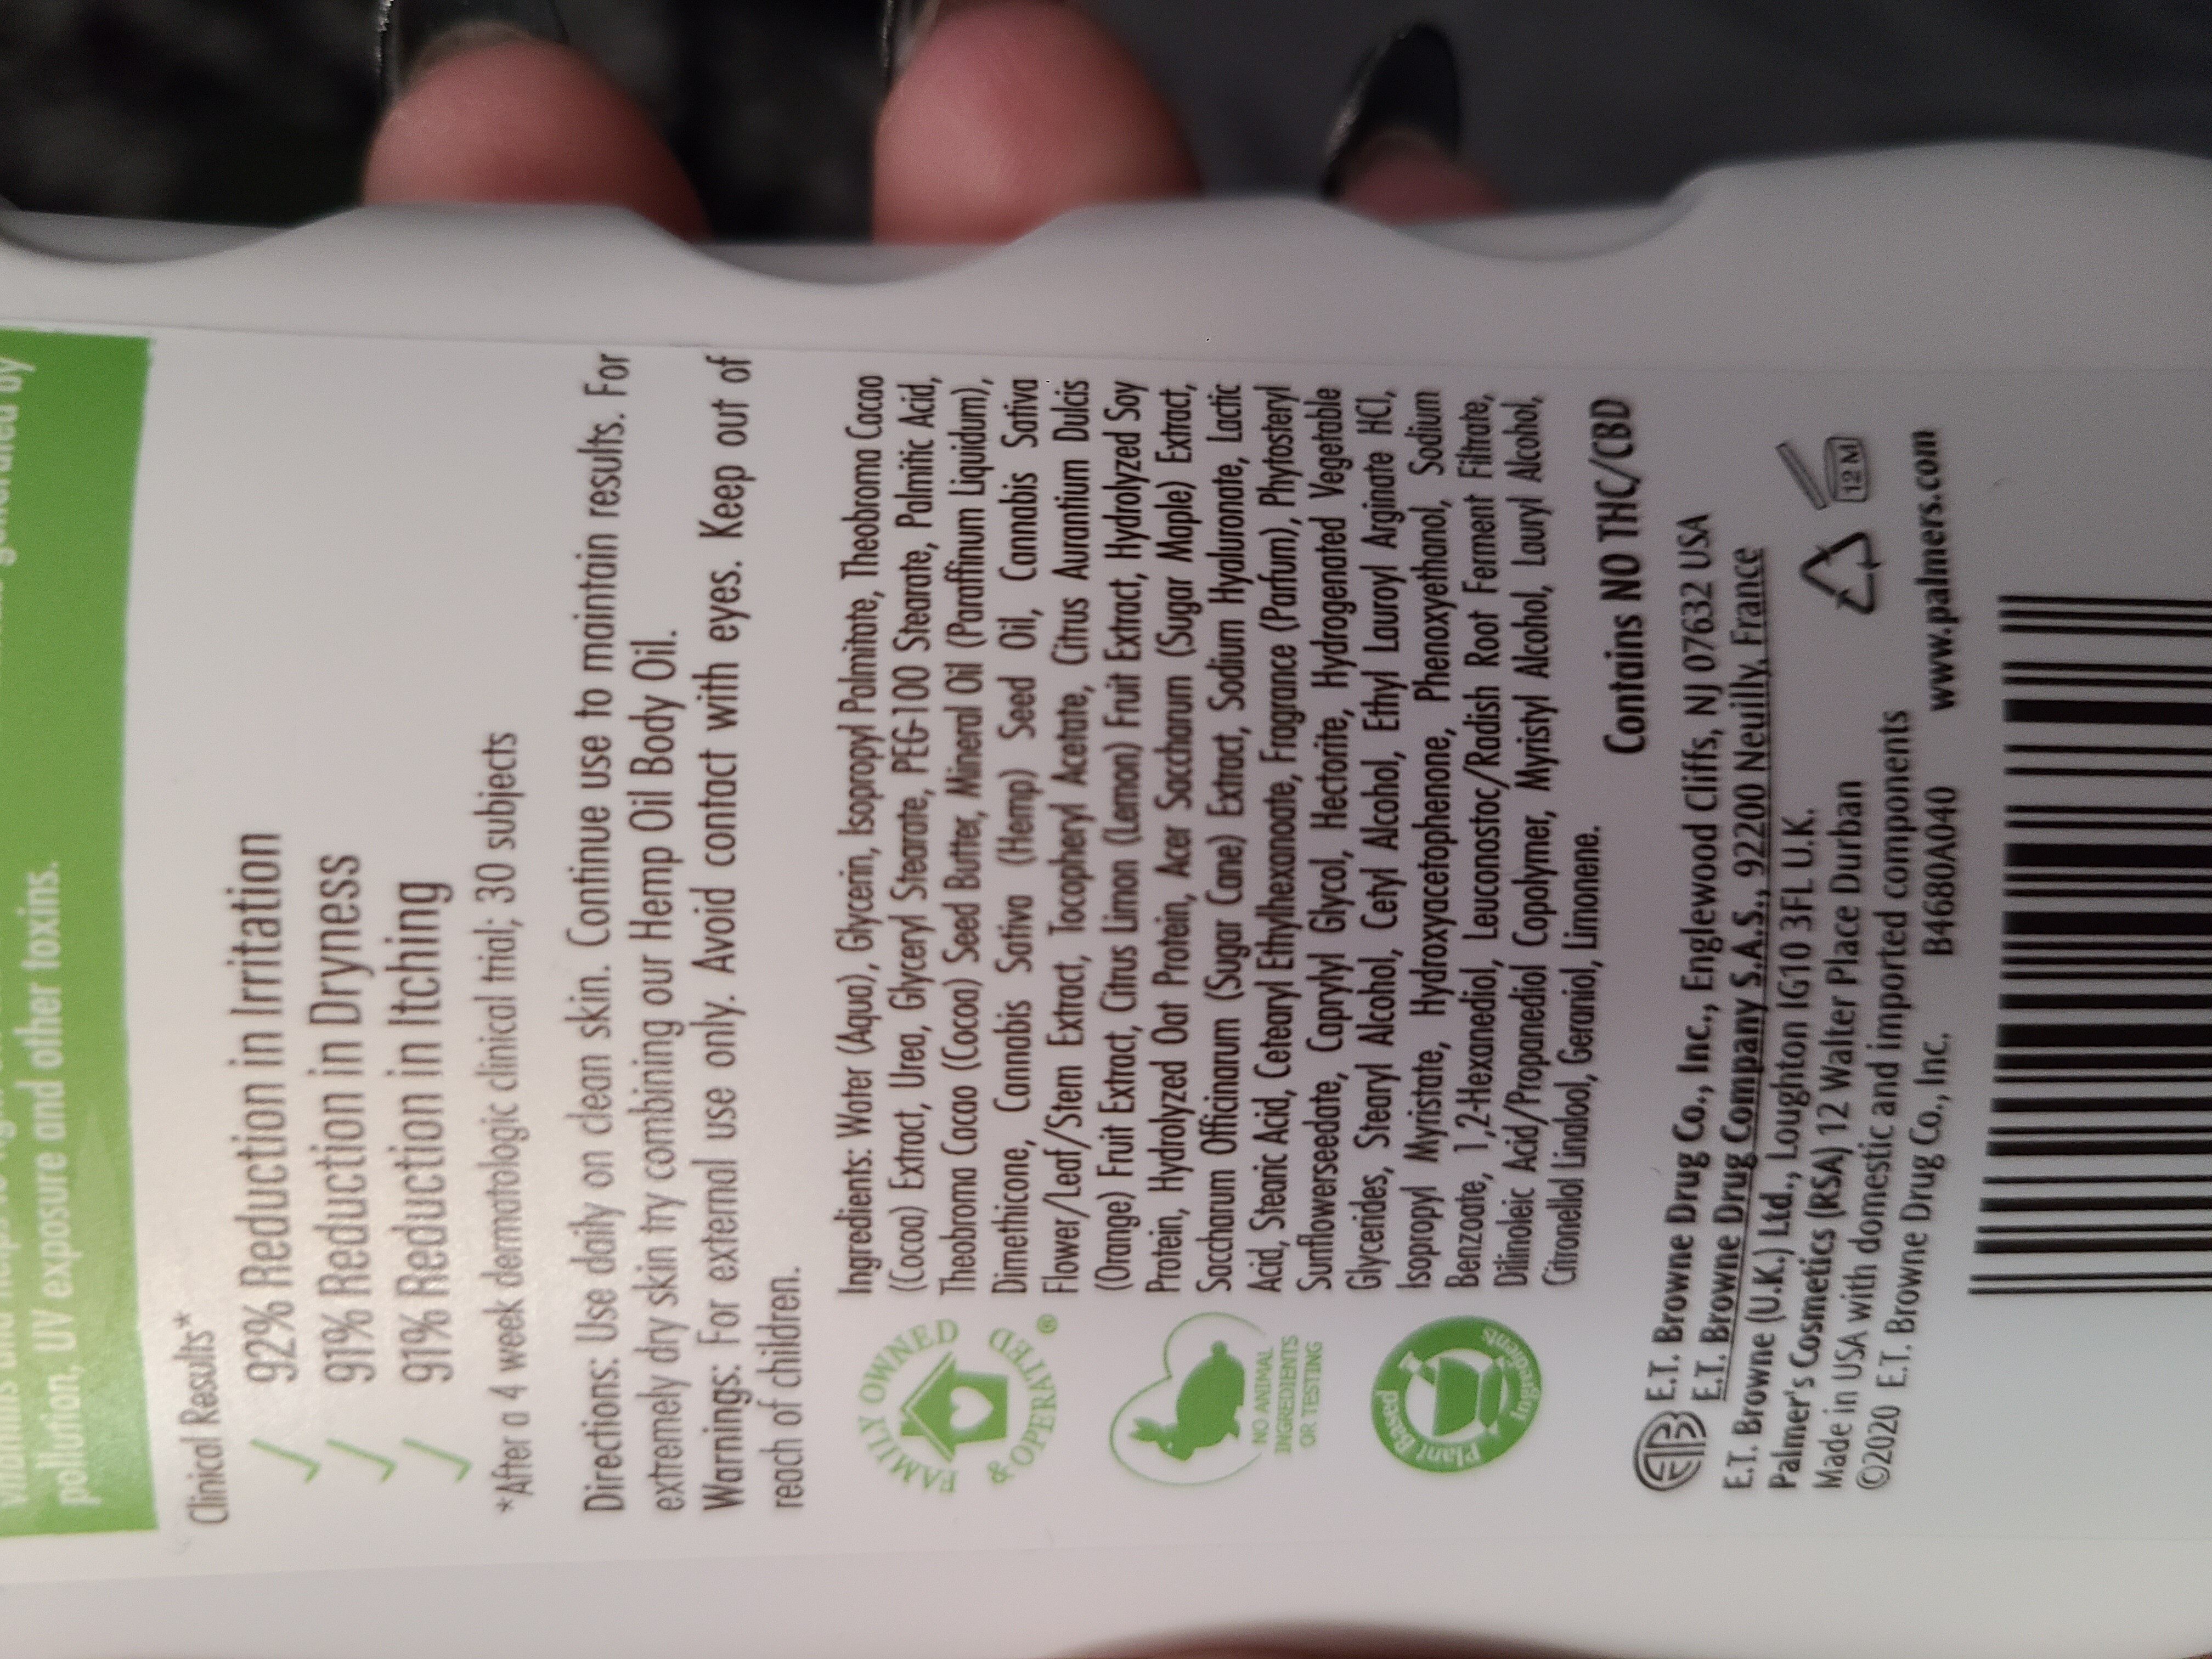 palmers hemp oil relief body lotion - Ingredientes - en